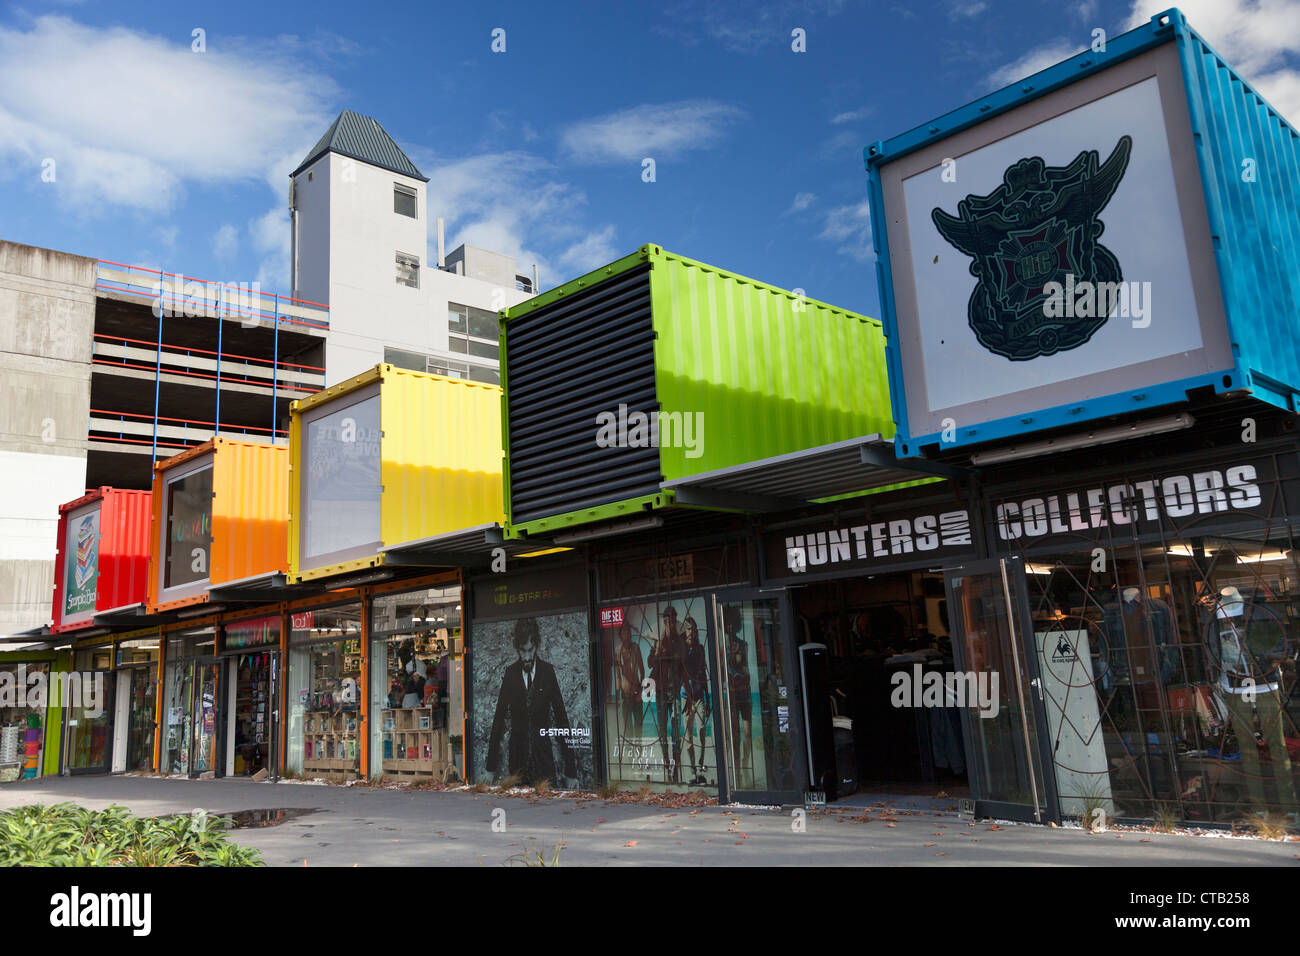 Nach dem Erdbeben Christchurch, Neuseeland - innovative Containerstadt instant Shopping Mall 3 Stockfoto